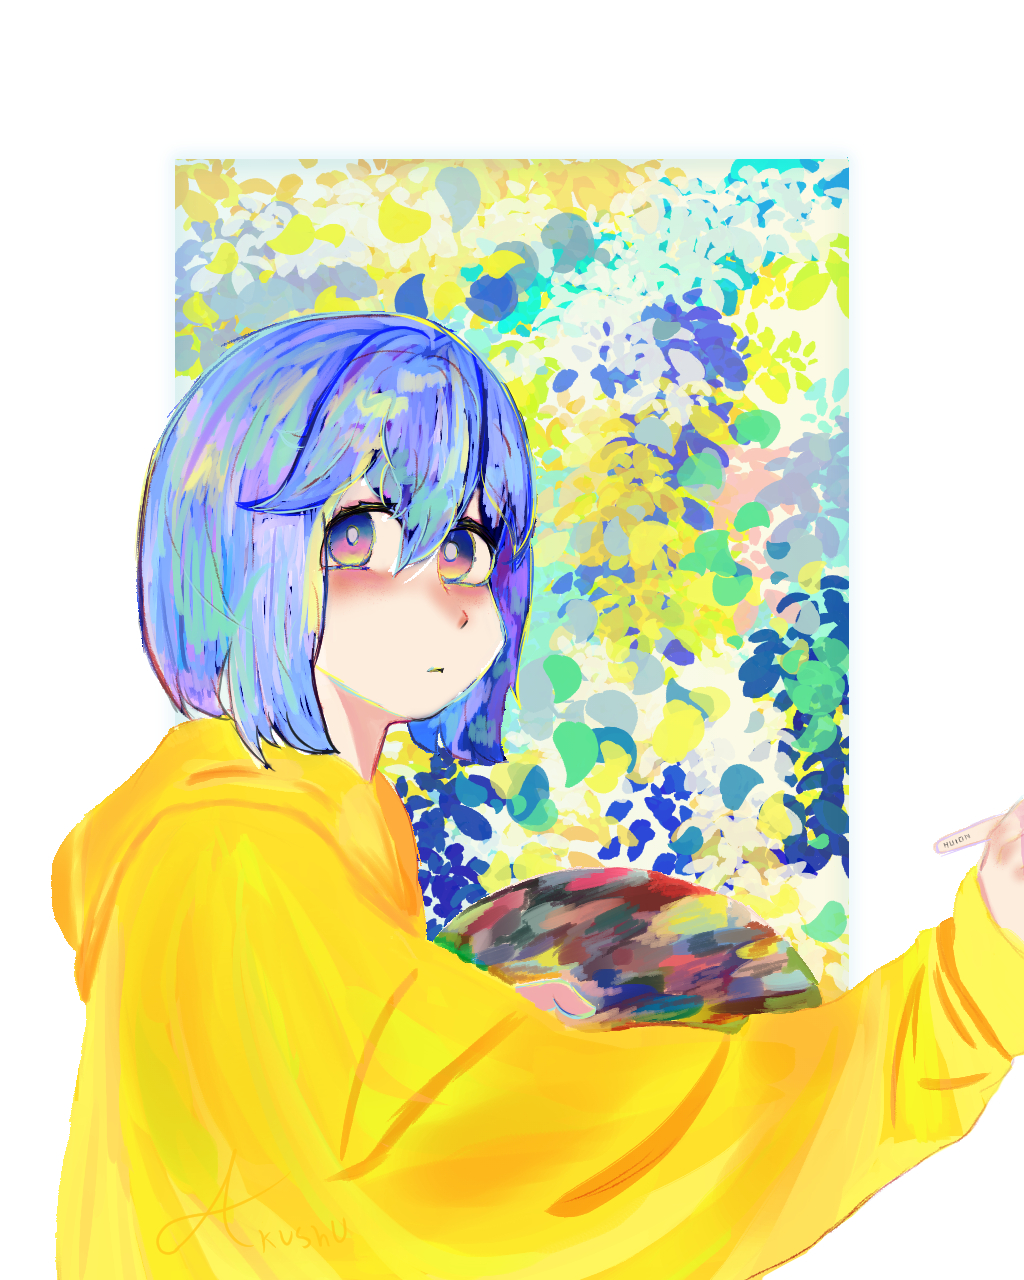 Anime 1024x1280 anime anime girls artwork painting women 2D drawing blue yellow canvas portrait display